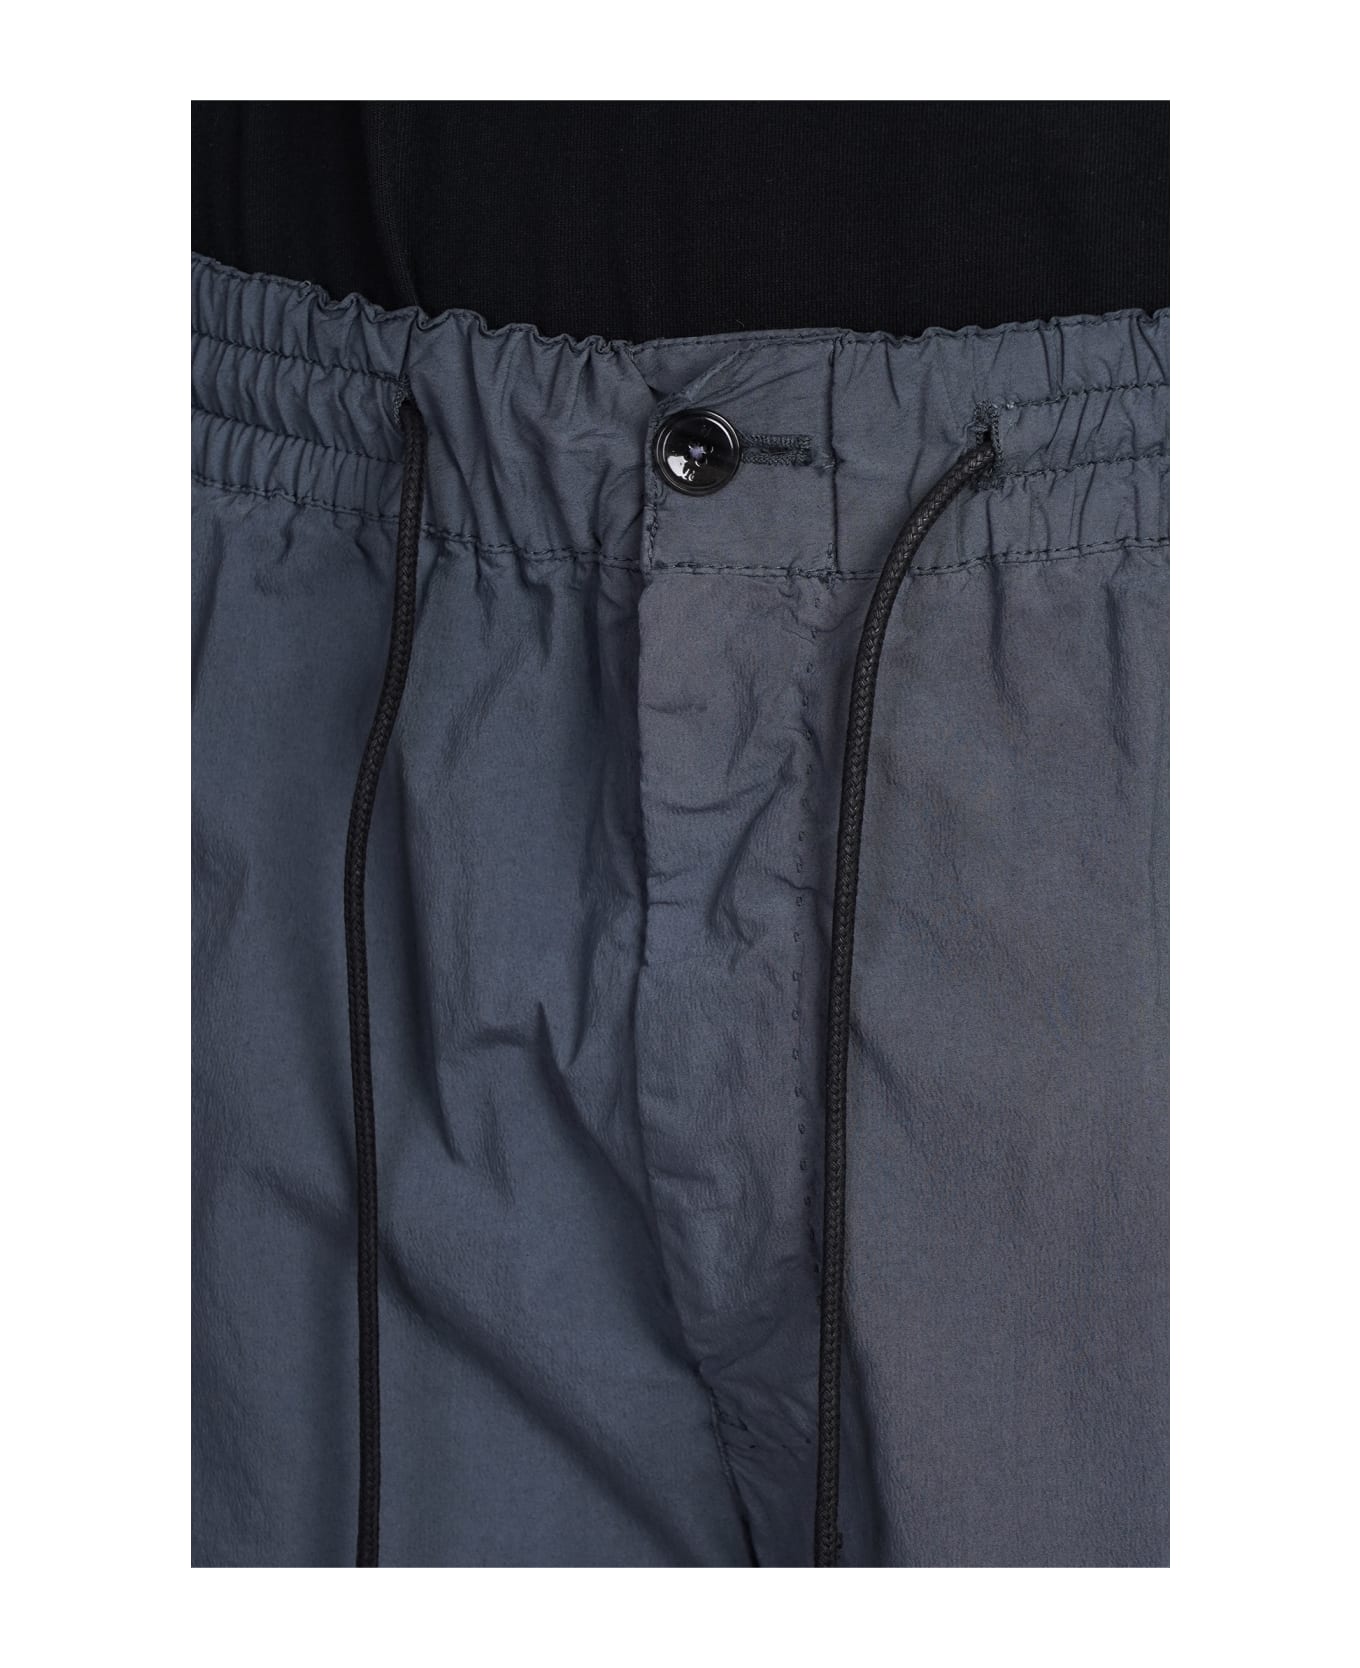 PT Torino Shorts In Grey Cotton - grey ショートパンツ